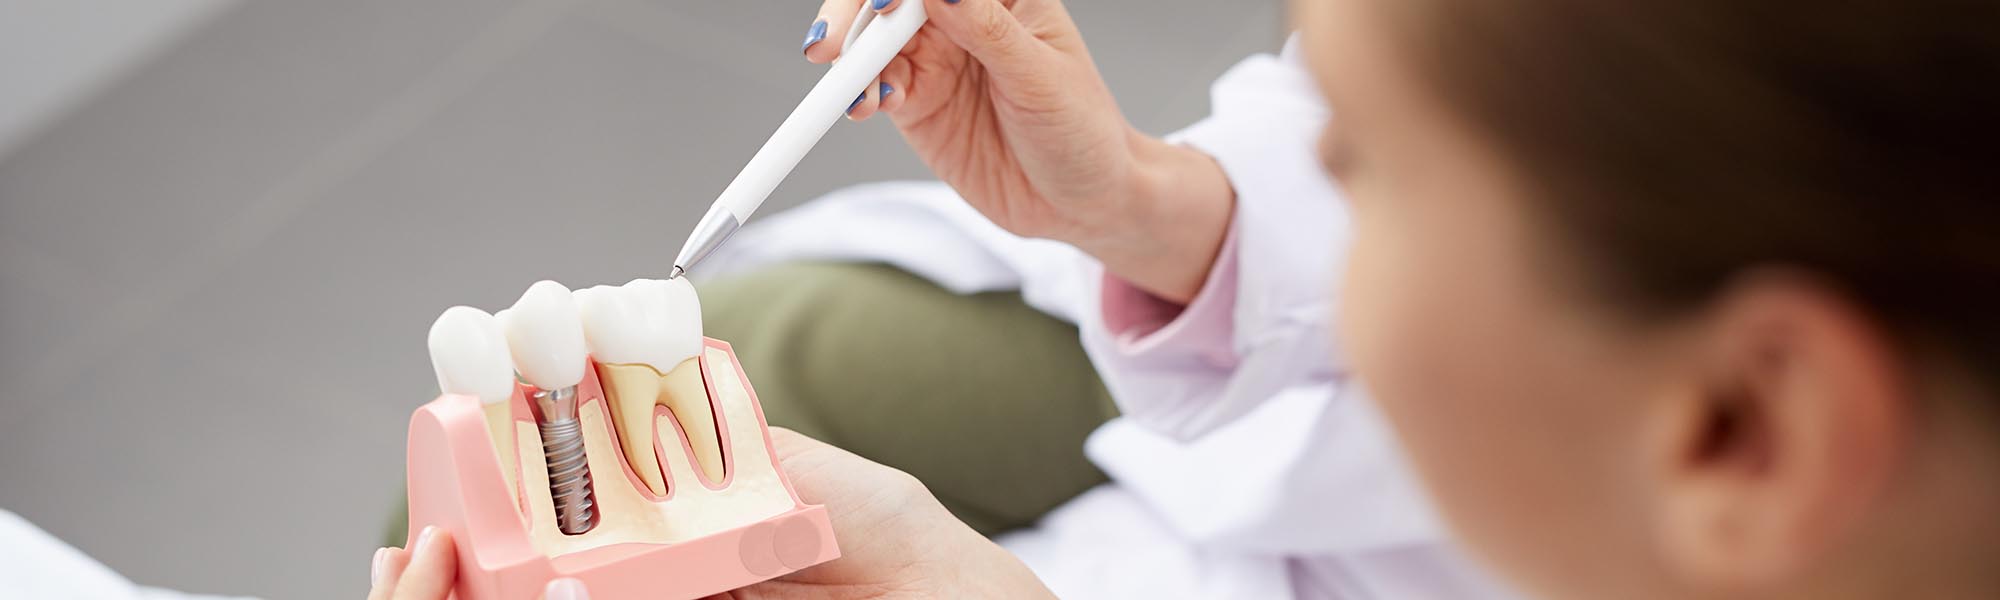 Dental Implants Benefits in Gardena CA